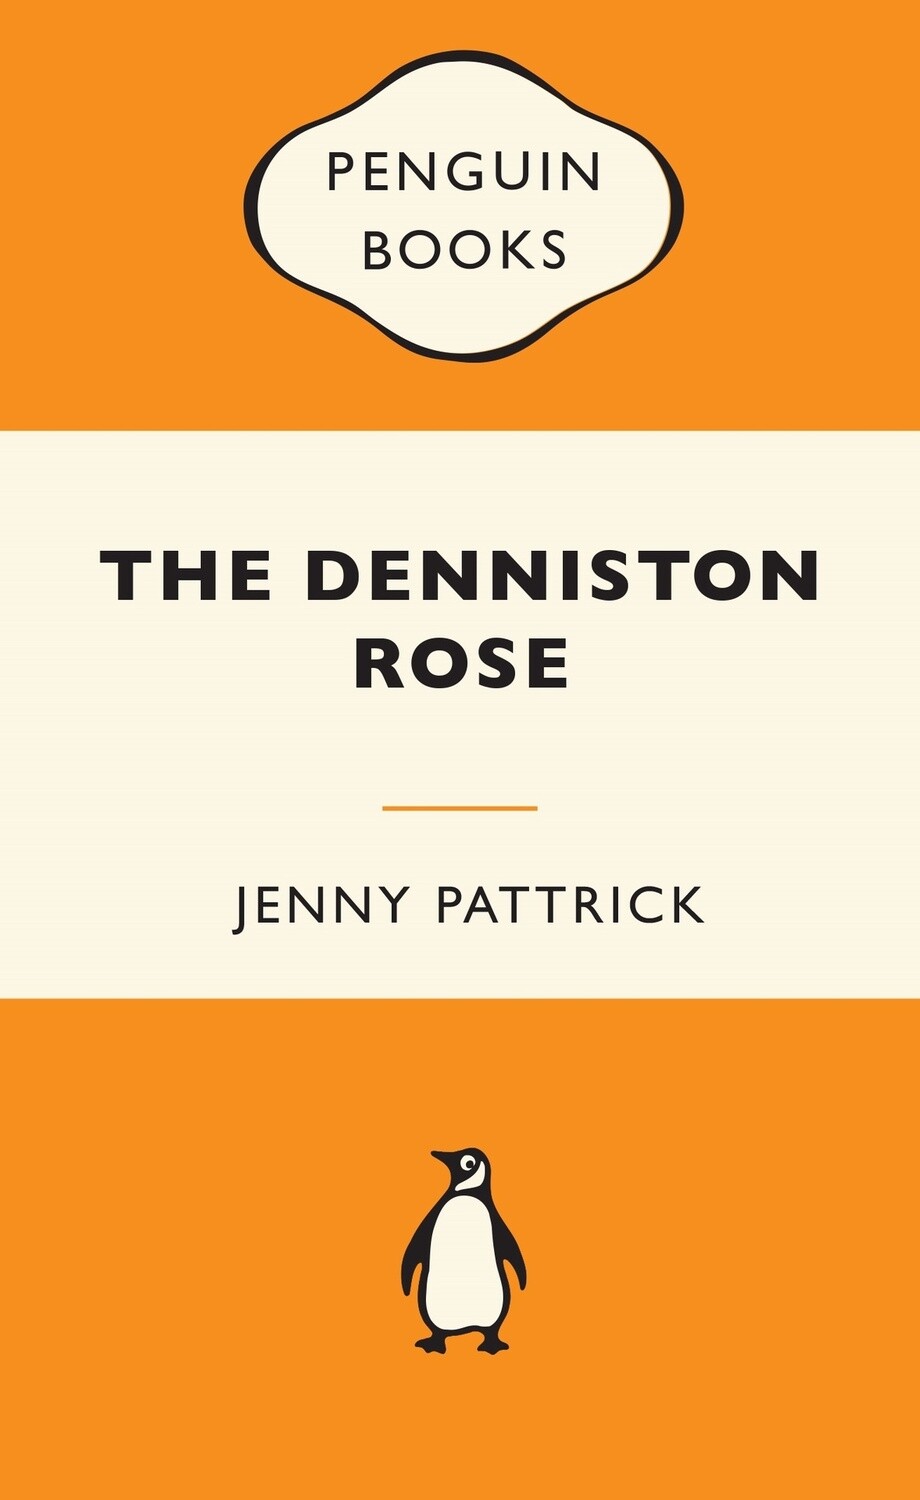 The Denniston Rose by Jenny Pattrick (Penguin Classics)